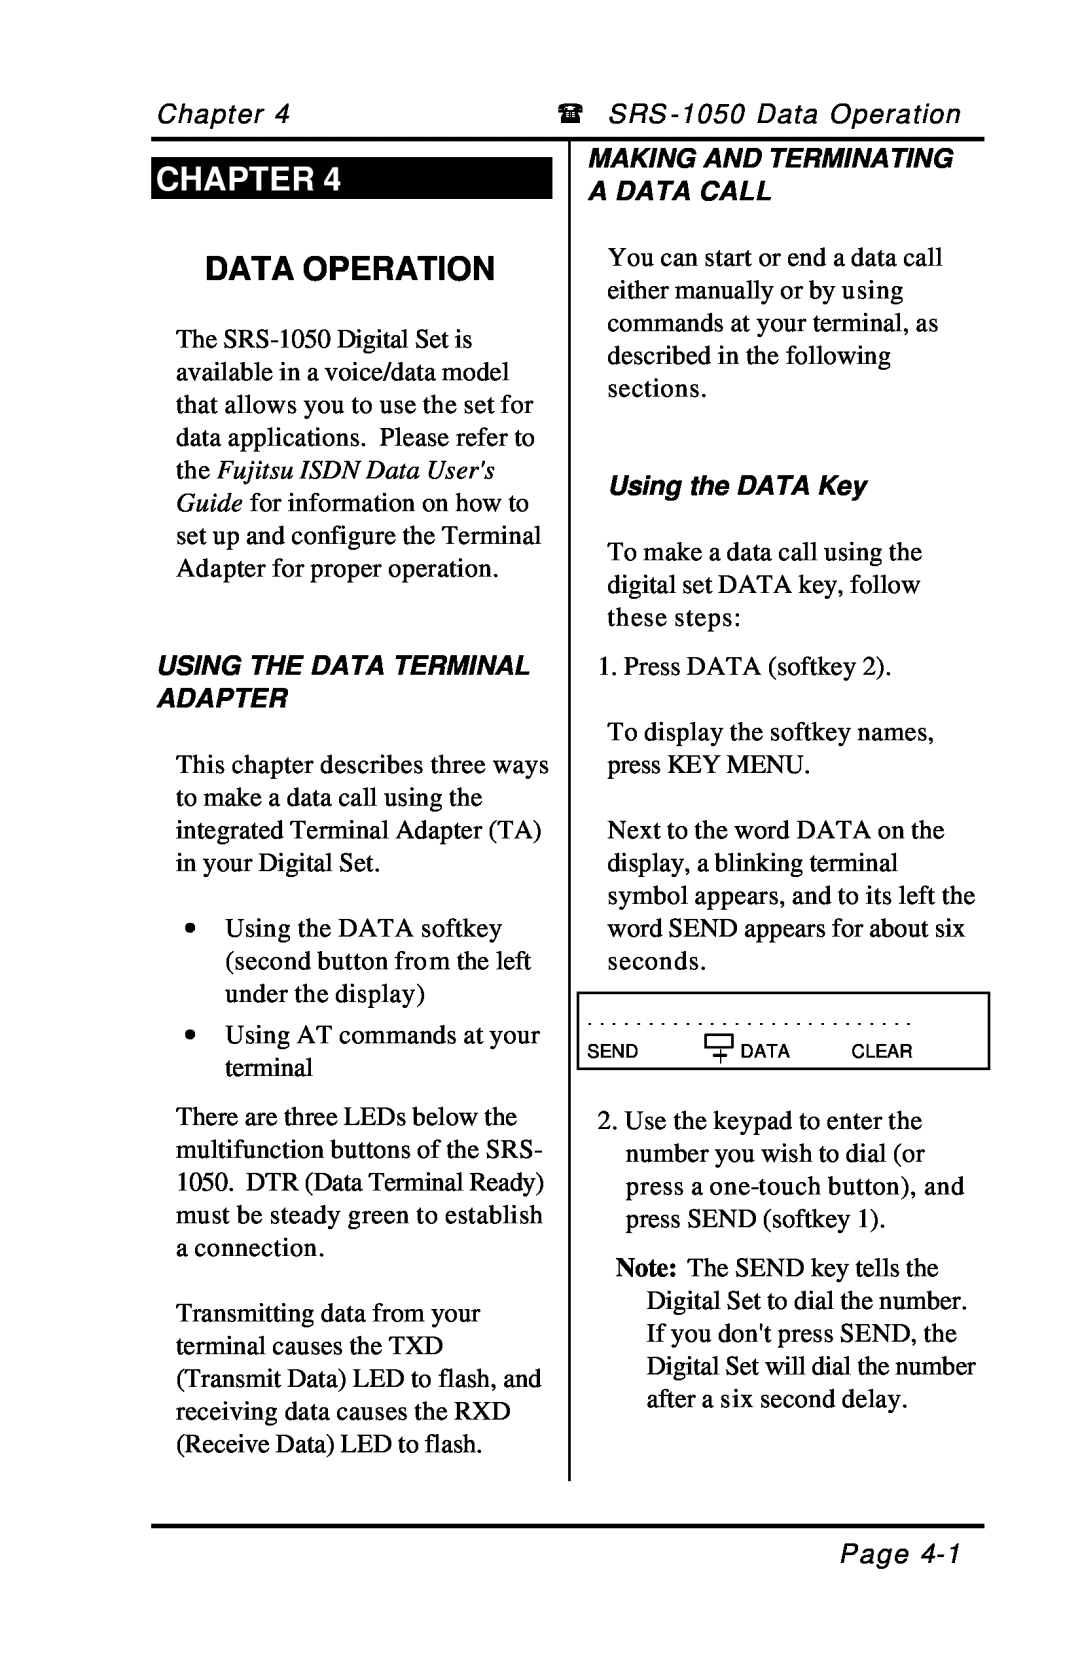 Fujitsu SRS-1050 Data Operation, Using The Data Terminal Adapter, Making And Terminating A Data Call, Using the DATA Key 